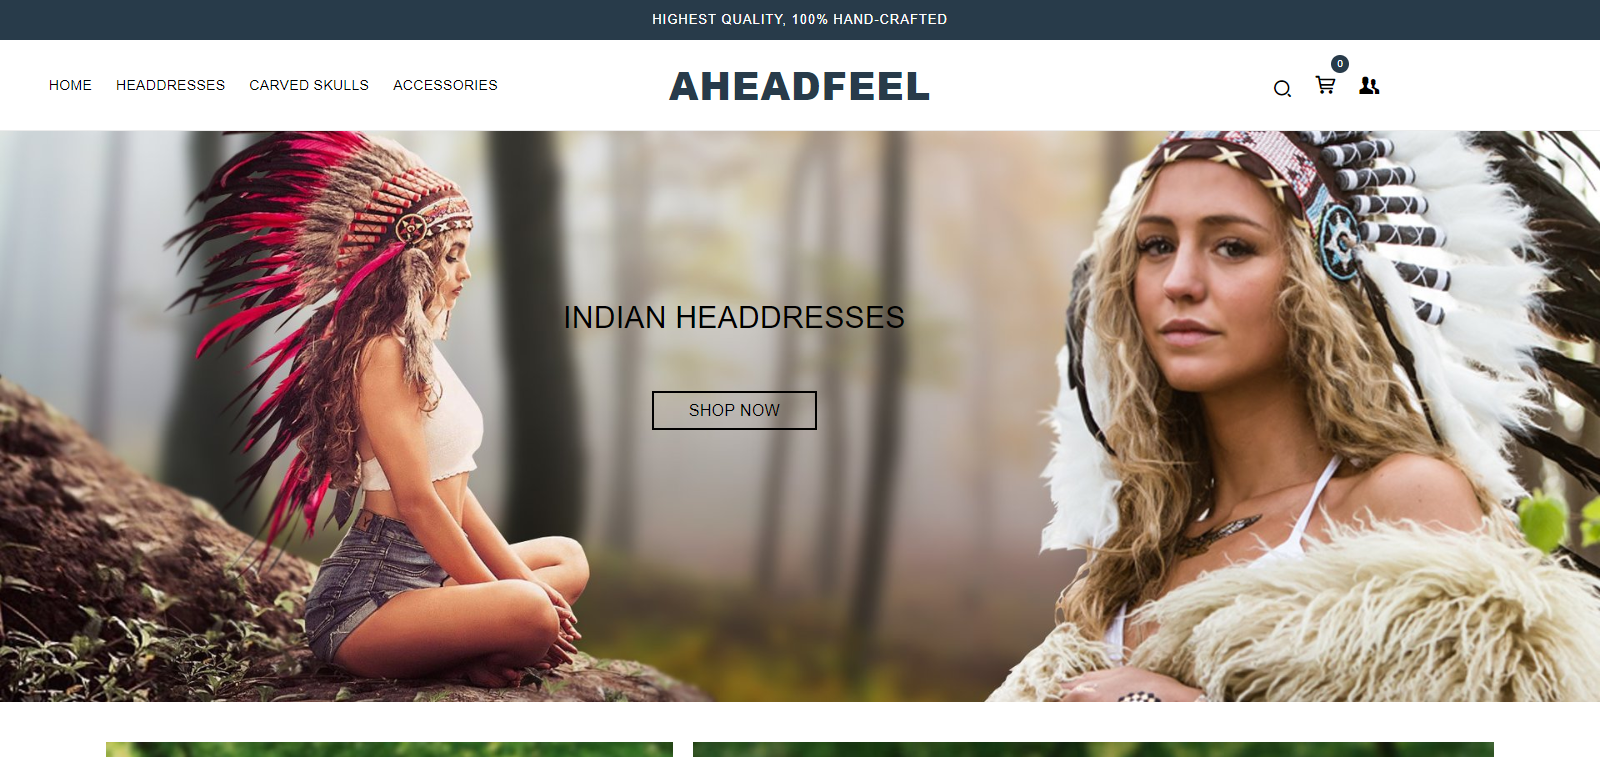 Aheadfeel Homepage Image